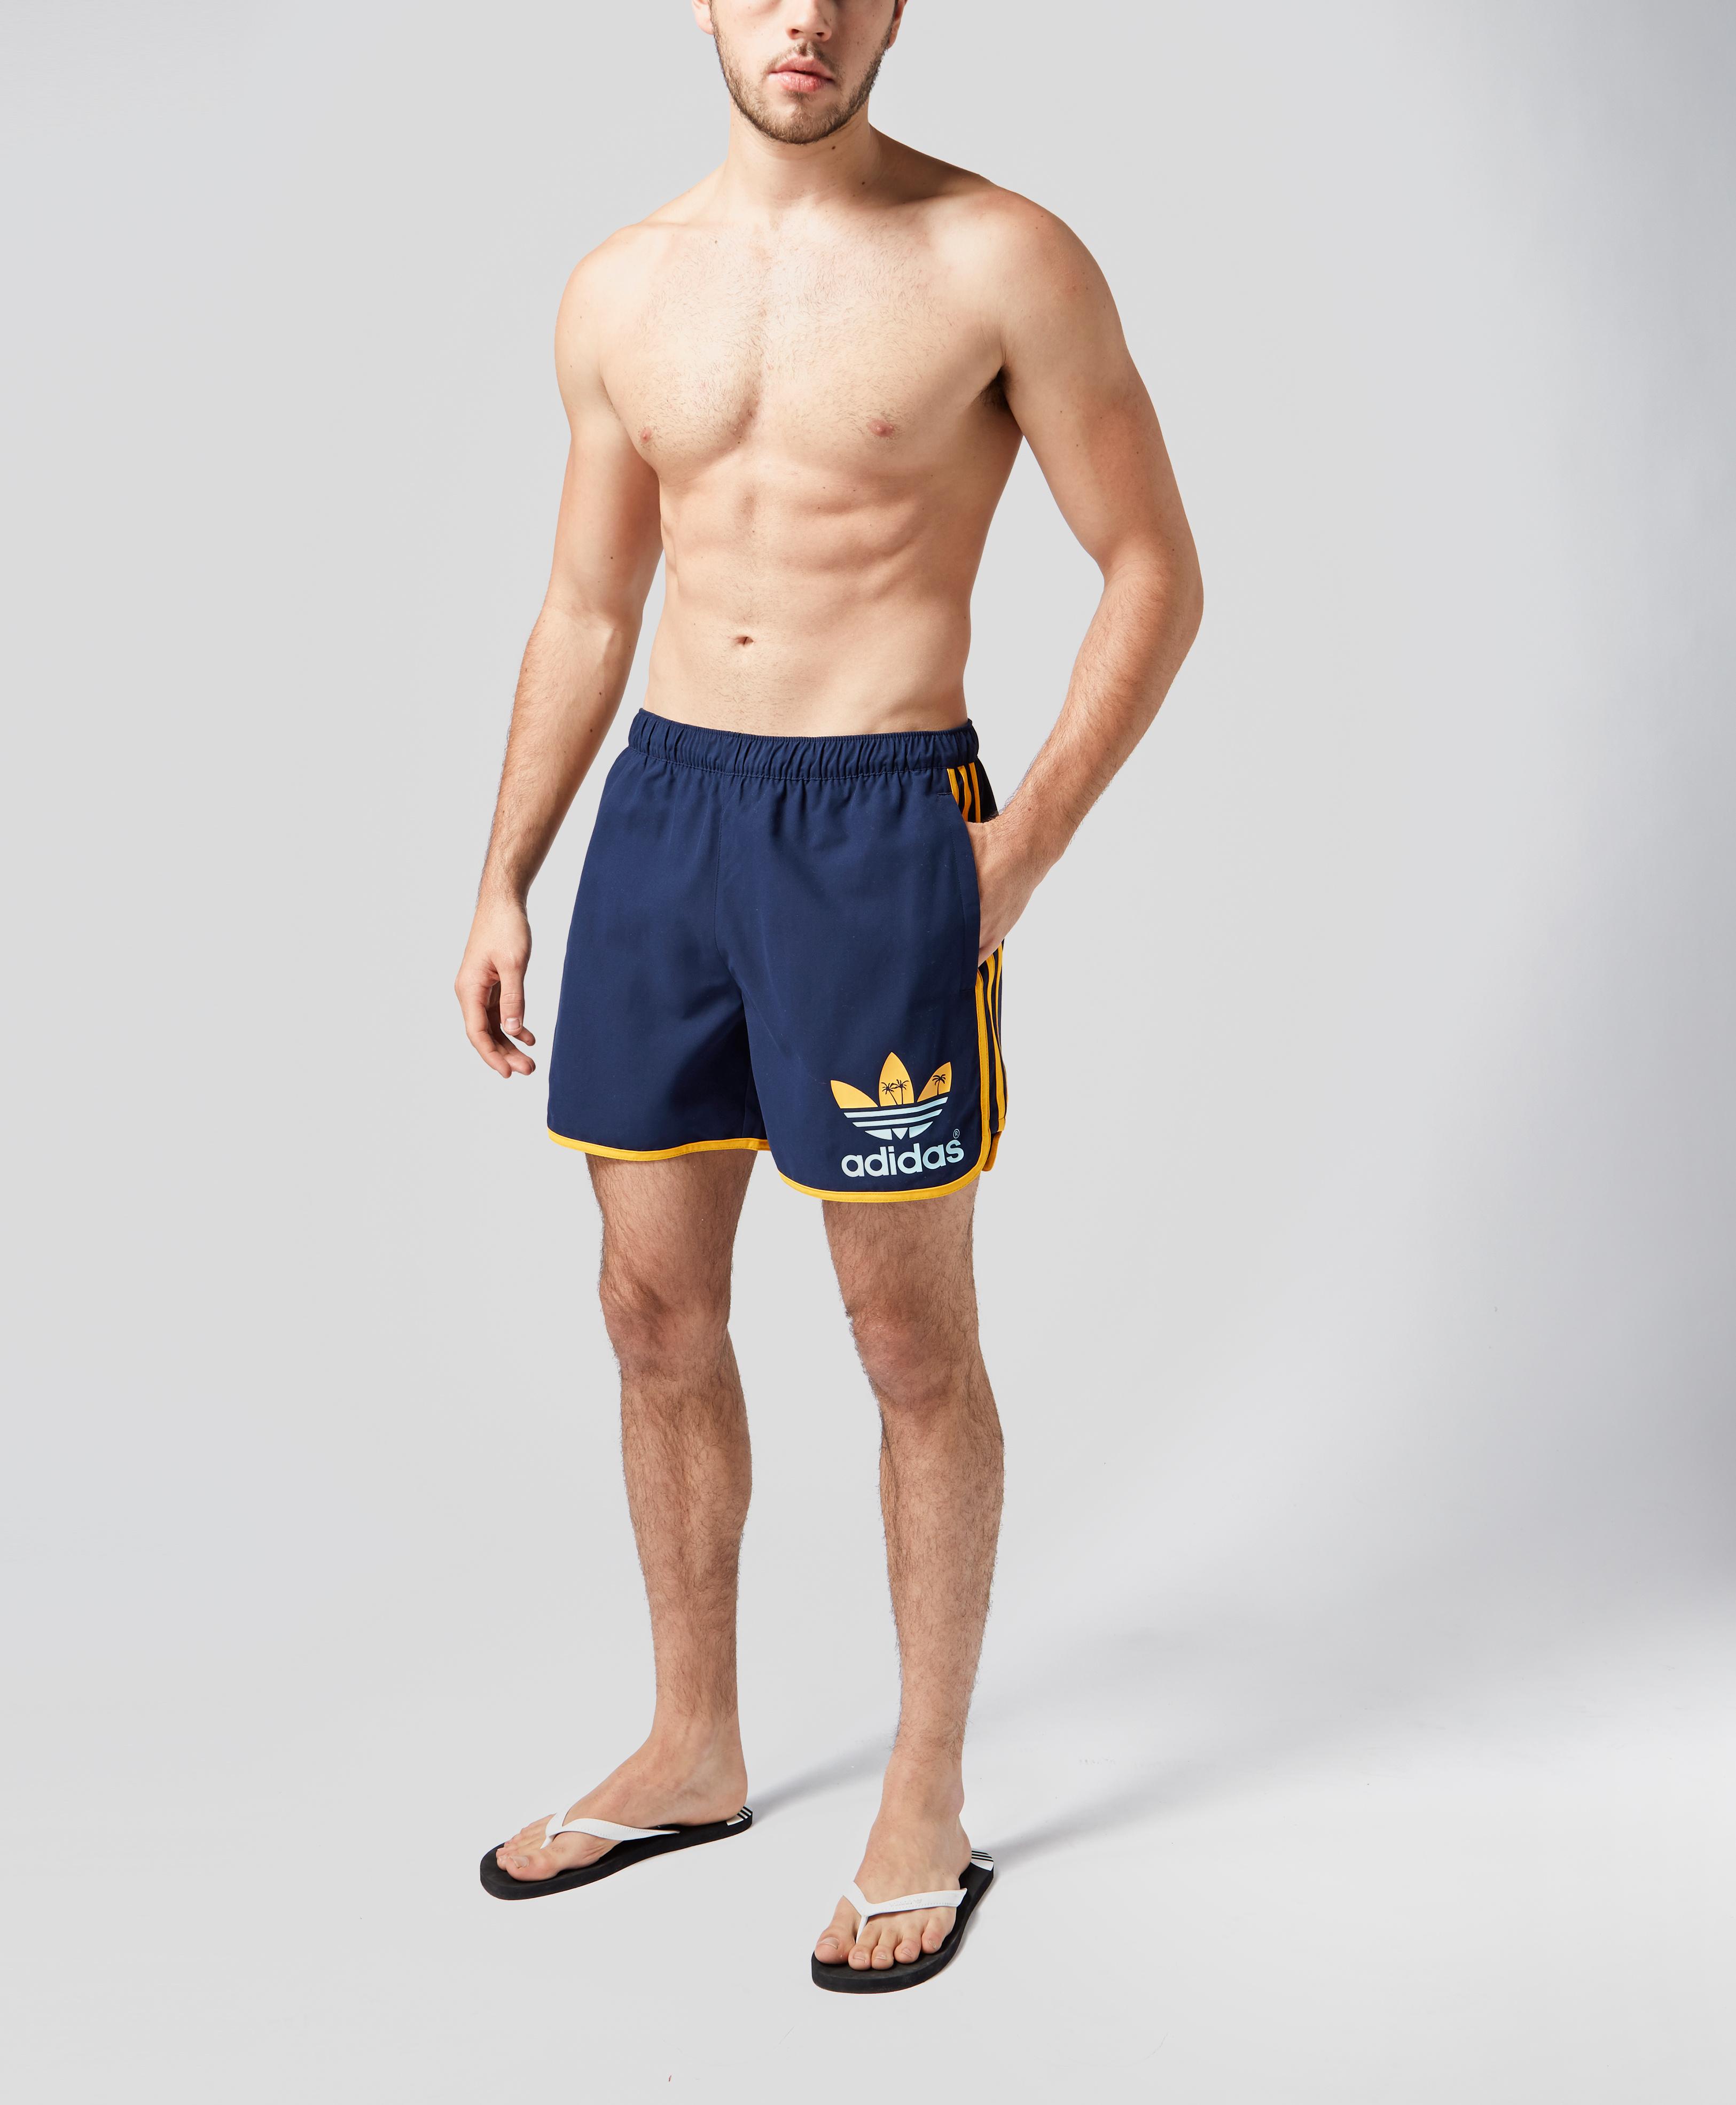 adidas island escape swim shorts